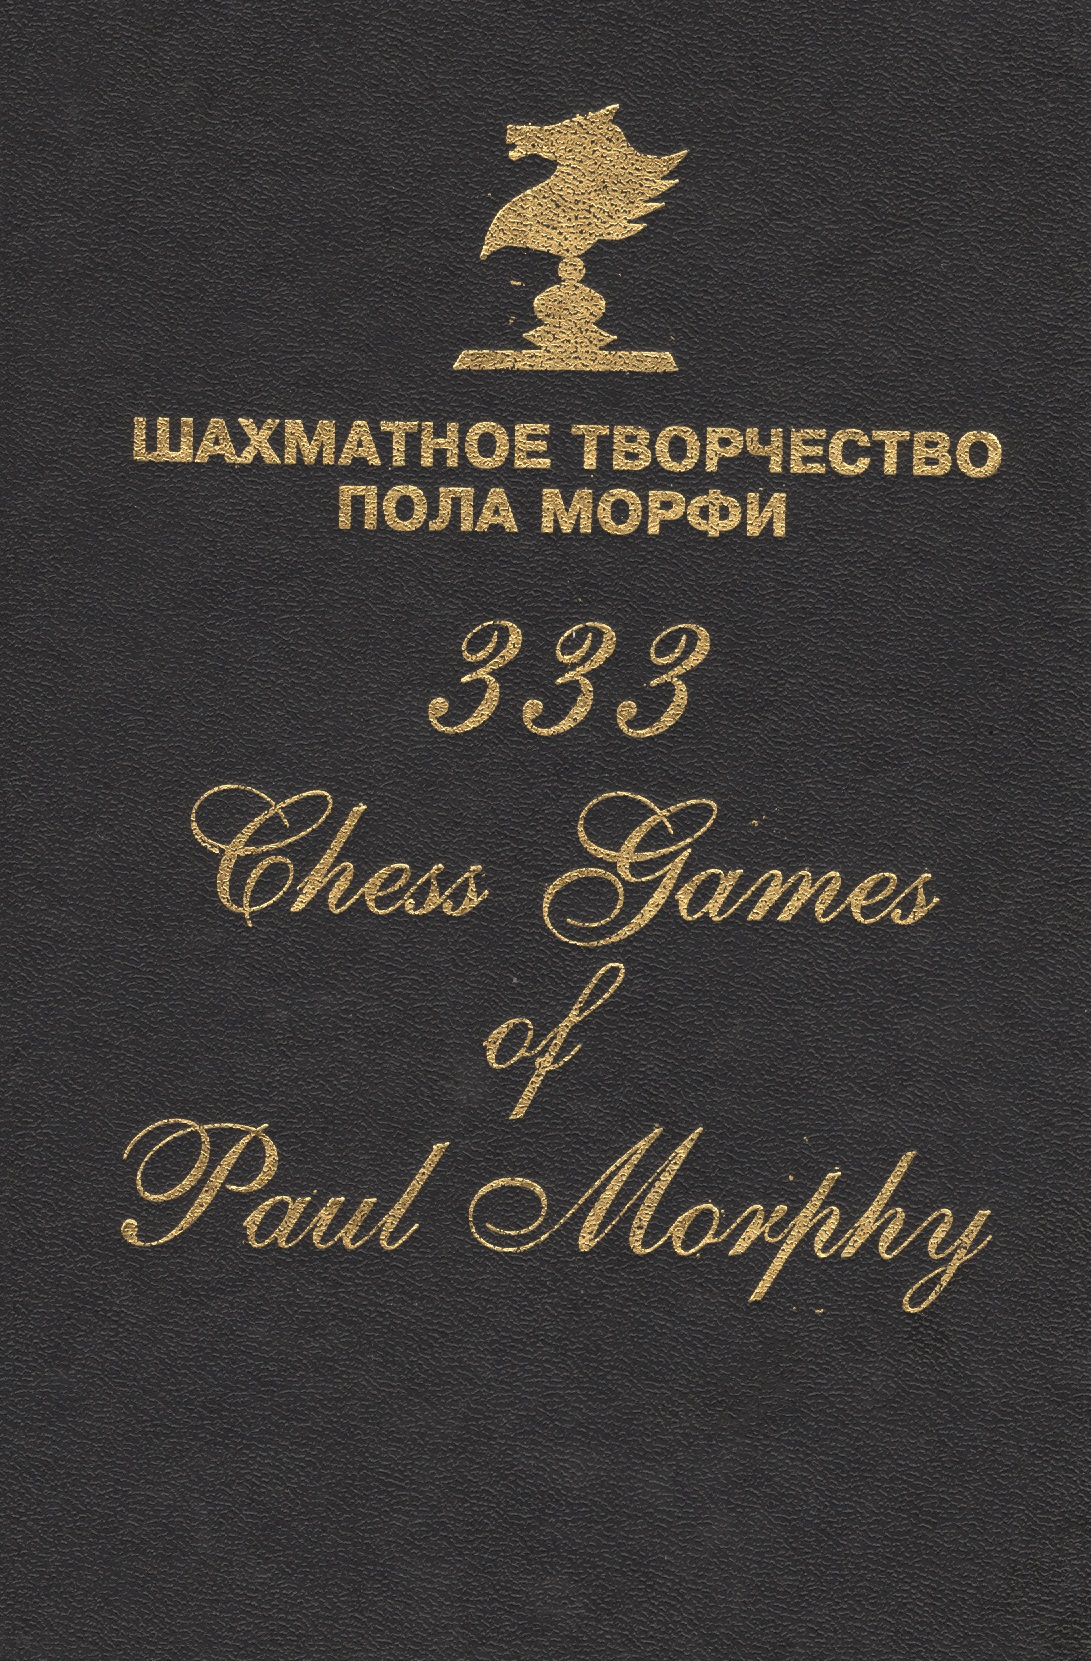 Шахматное творчество Пола Морфи 333 Chess games of Paul Morphy (Сафиуллин)